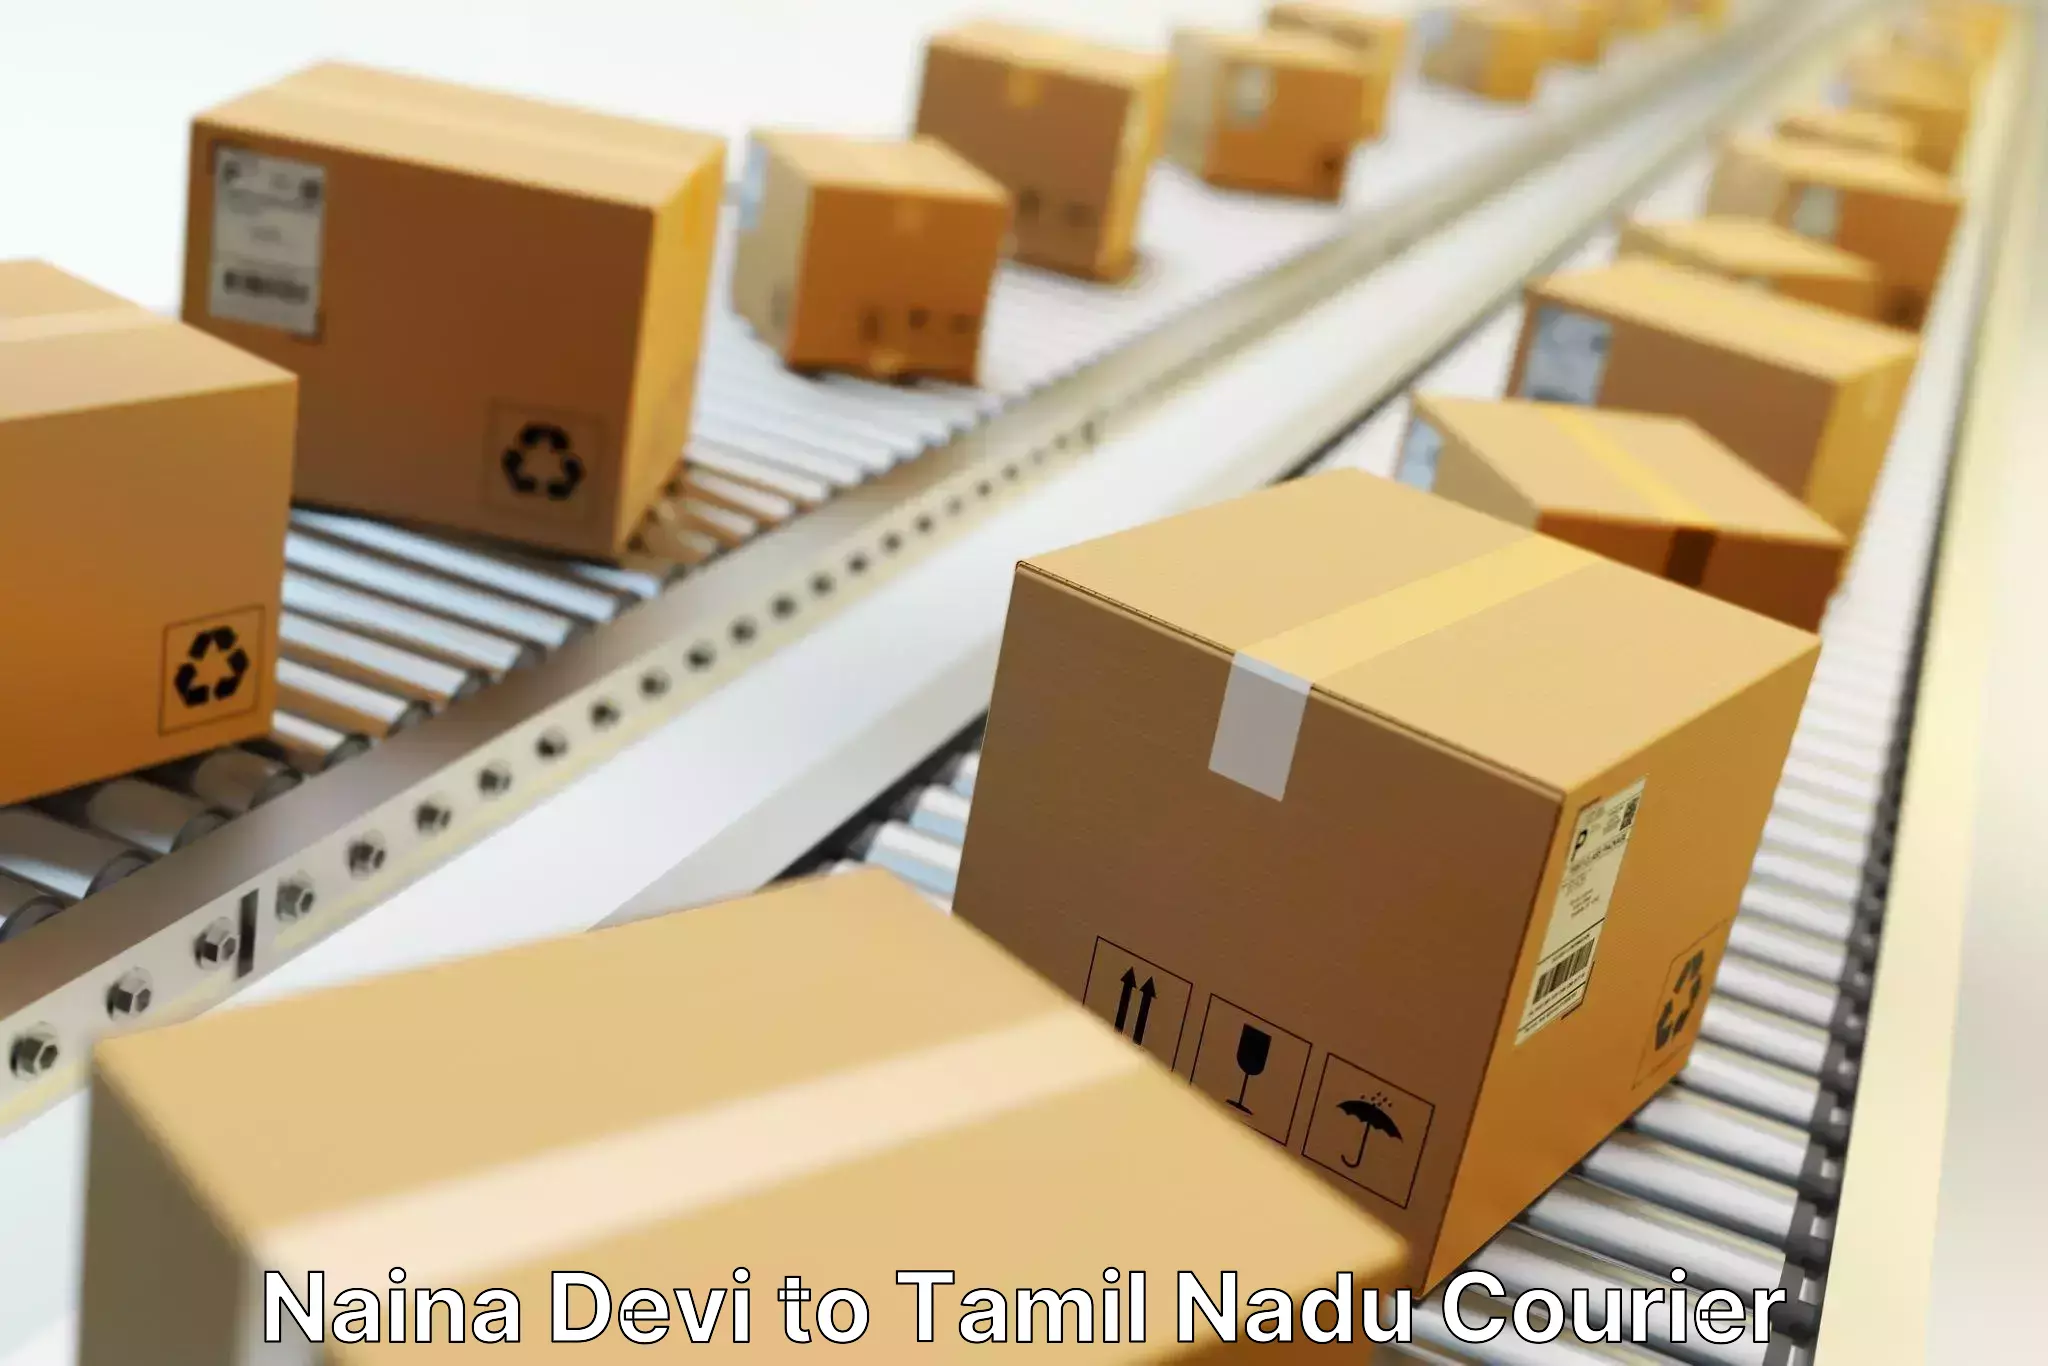 Express mail service Naina Devi to Tamil Nadu